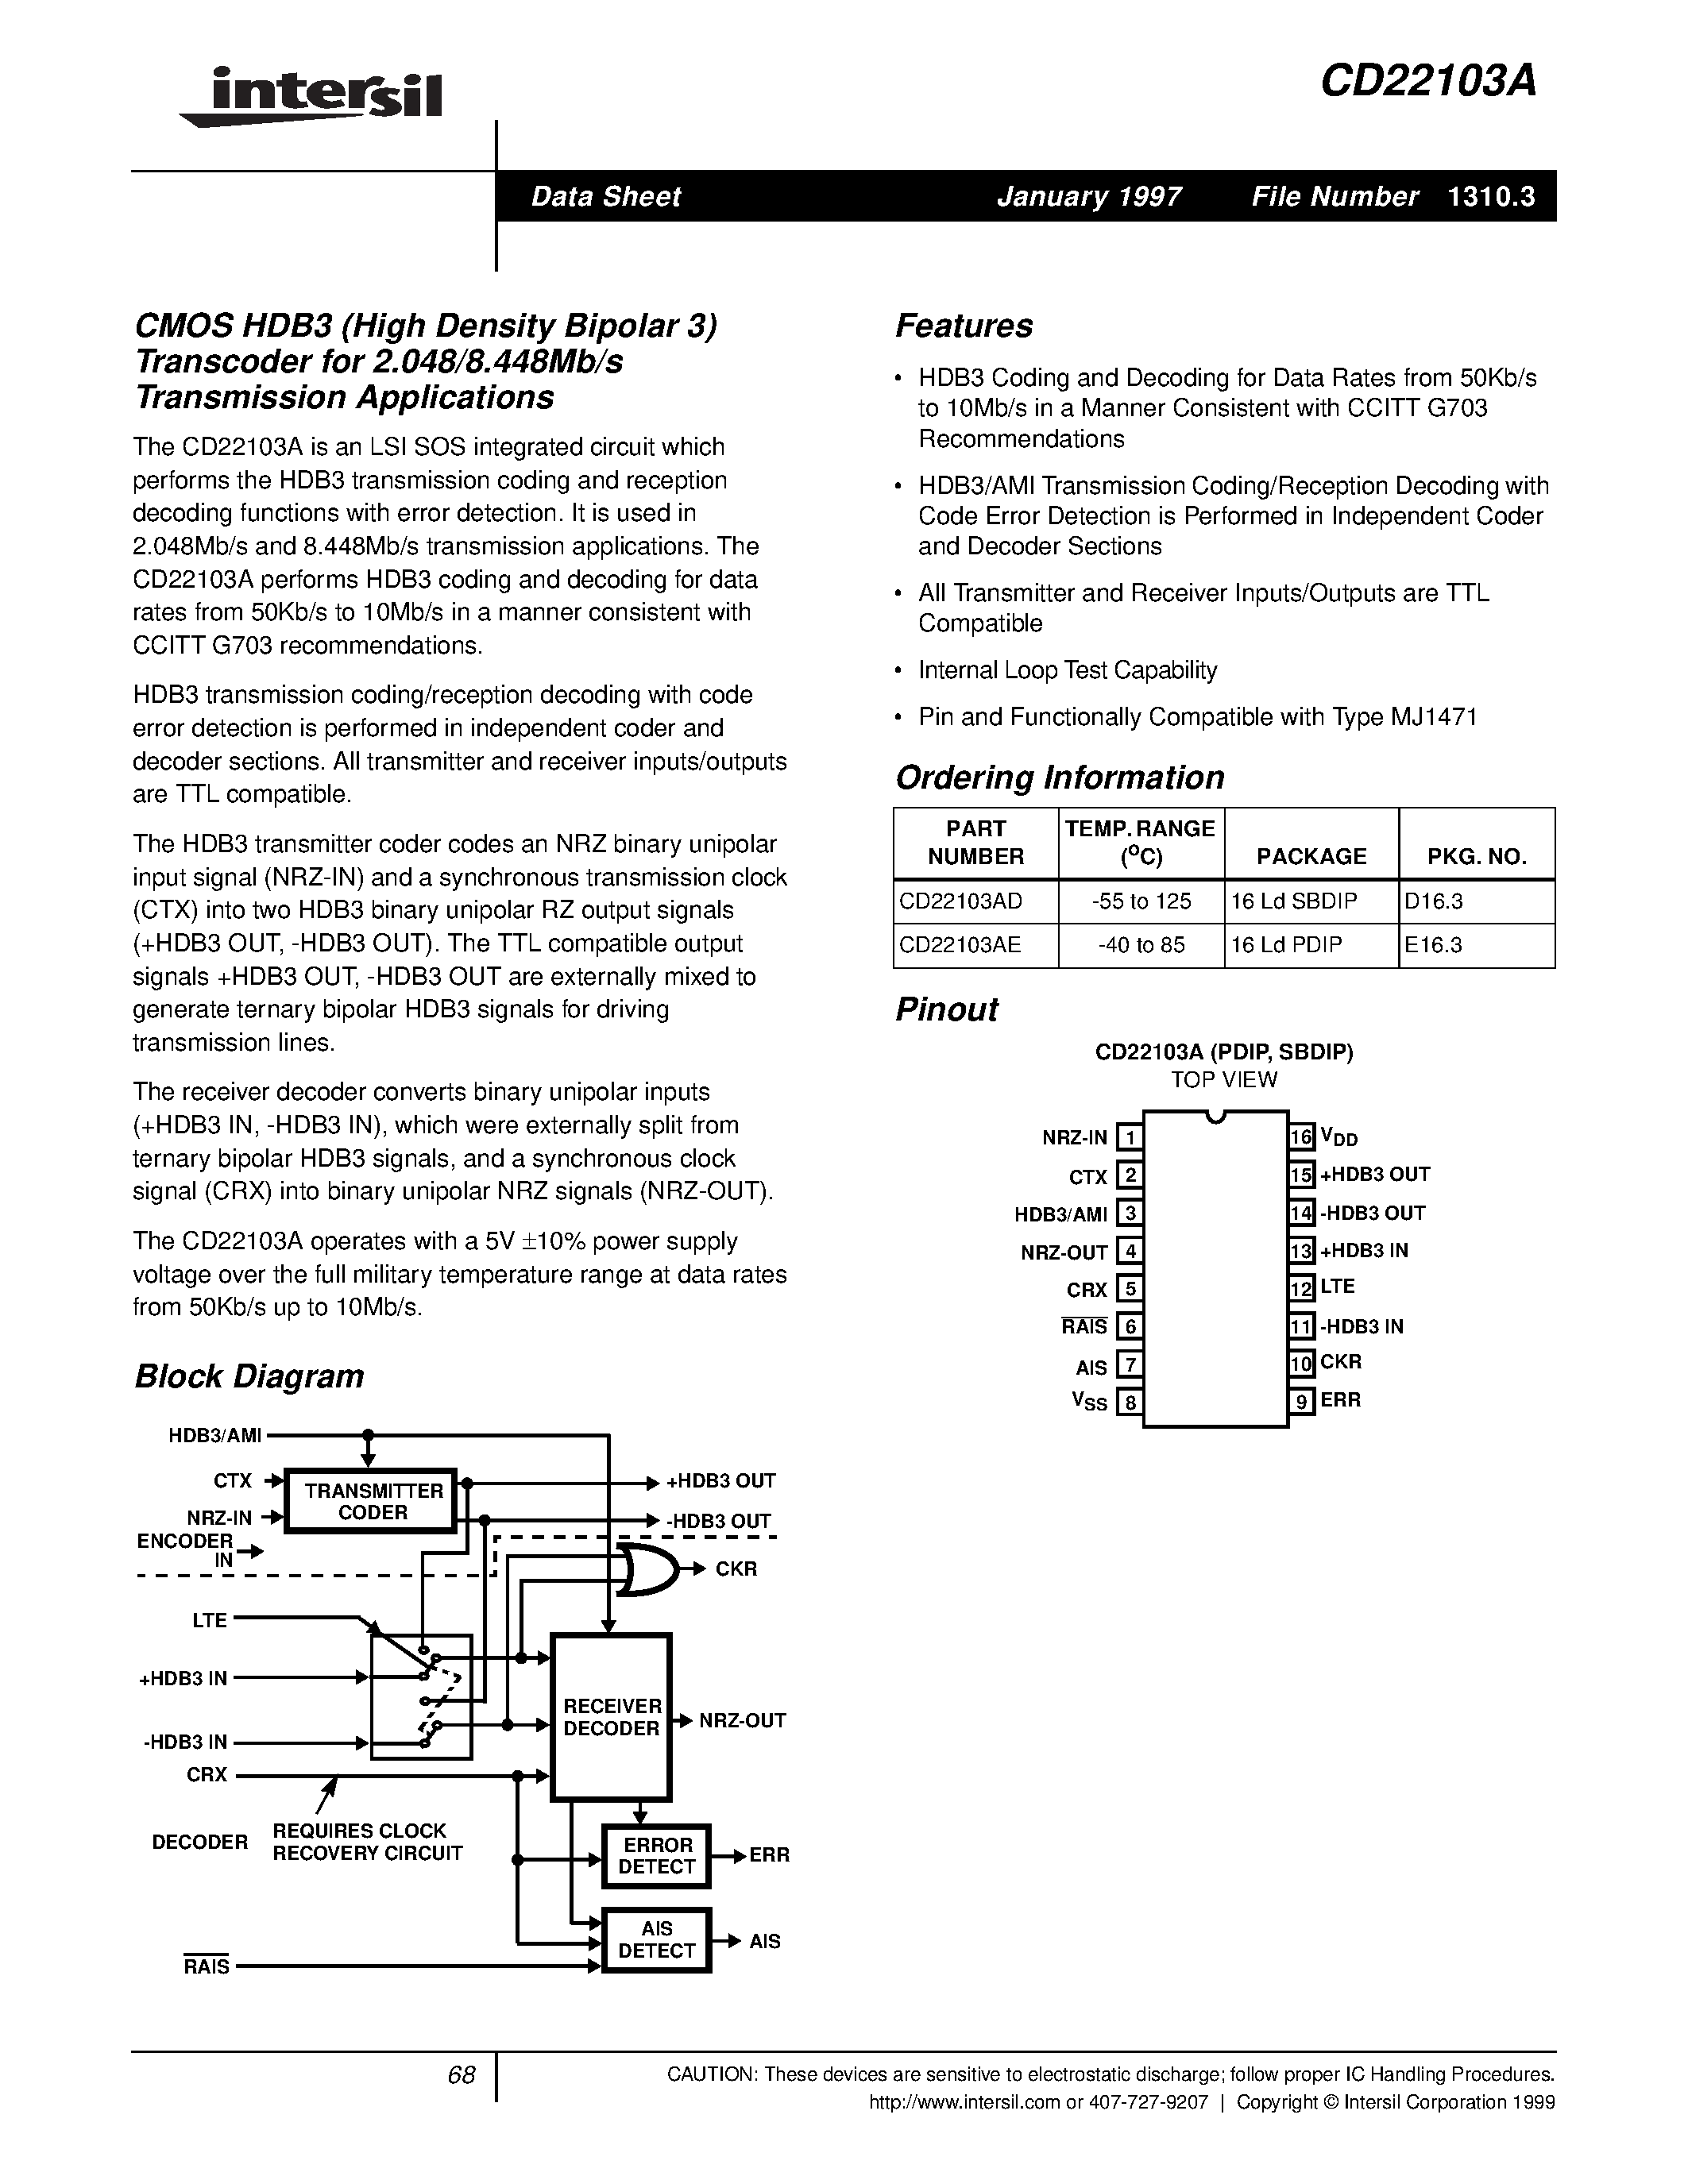 Даташит CD22103AD - CMOS HDB3 High Density Bipolar 3 Transcoder for 2.048/8.448Mb/s Transmission Applications страница 1